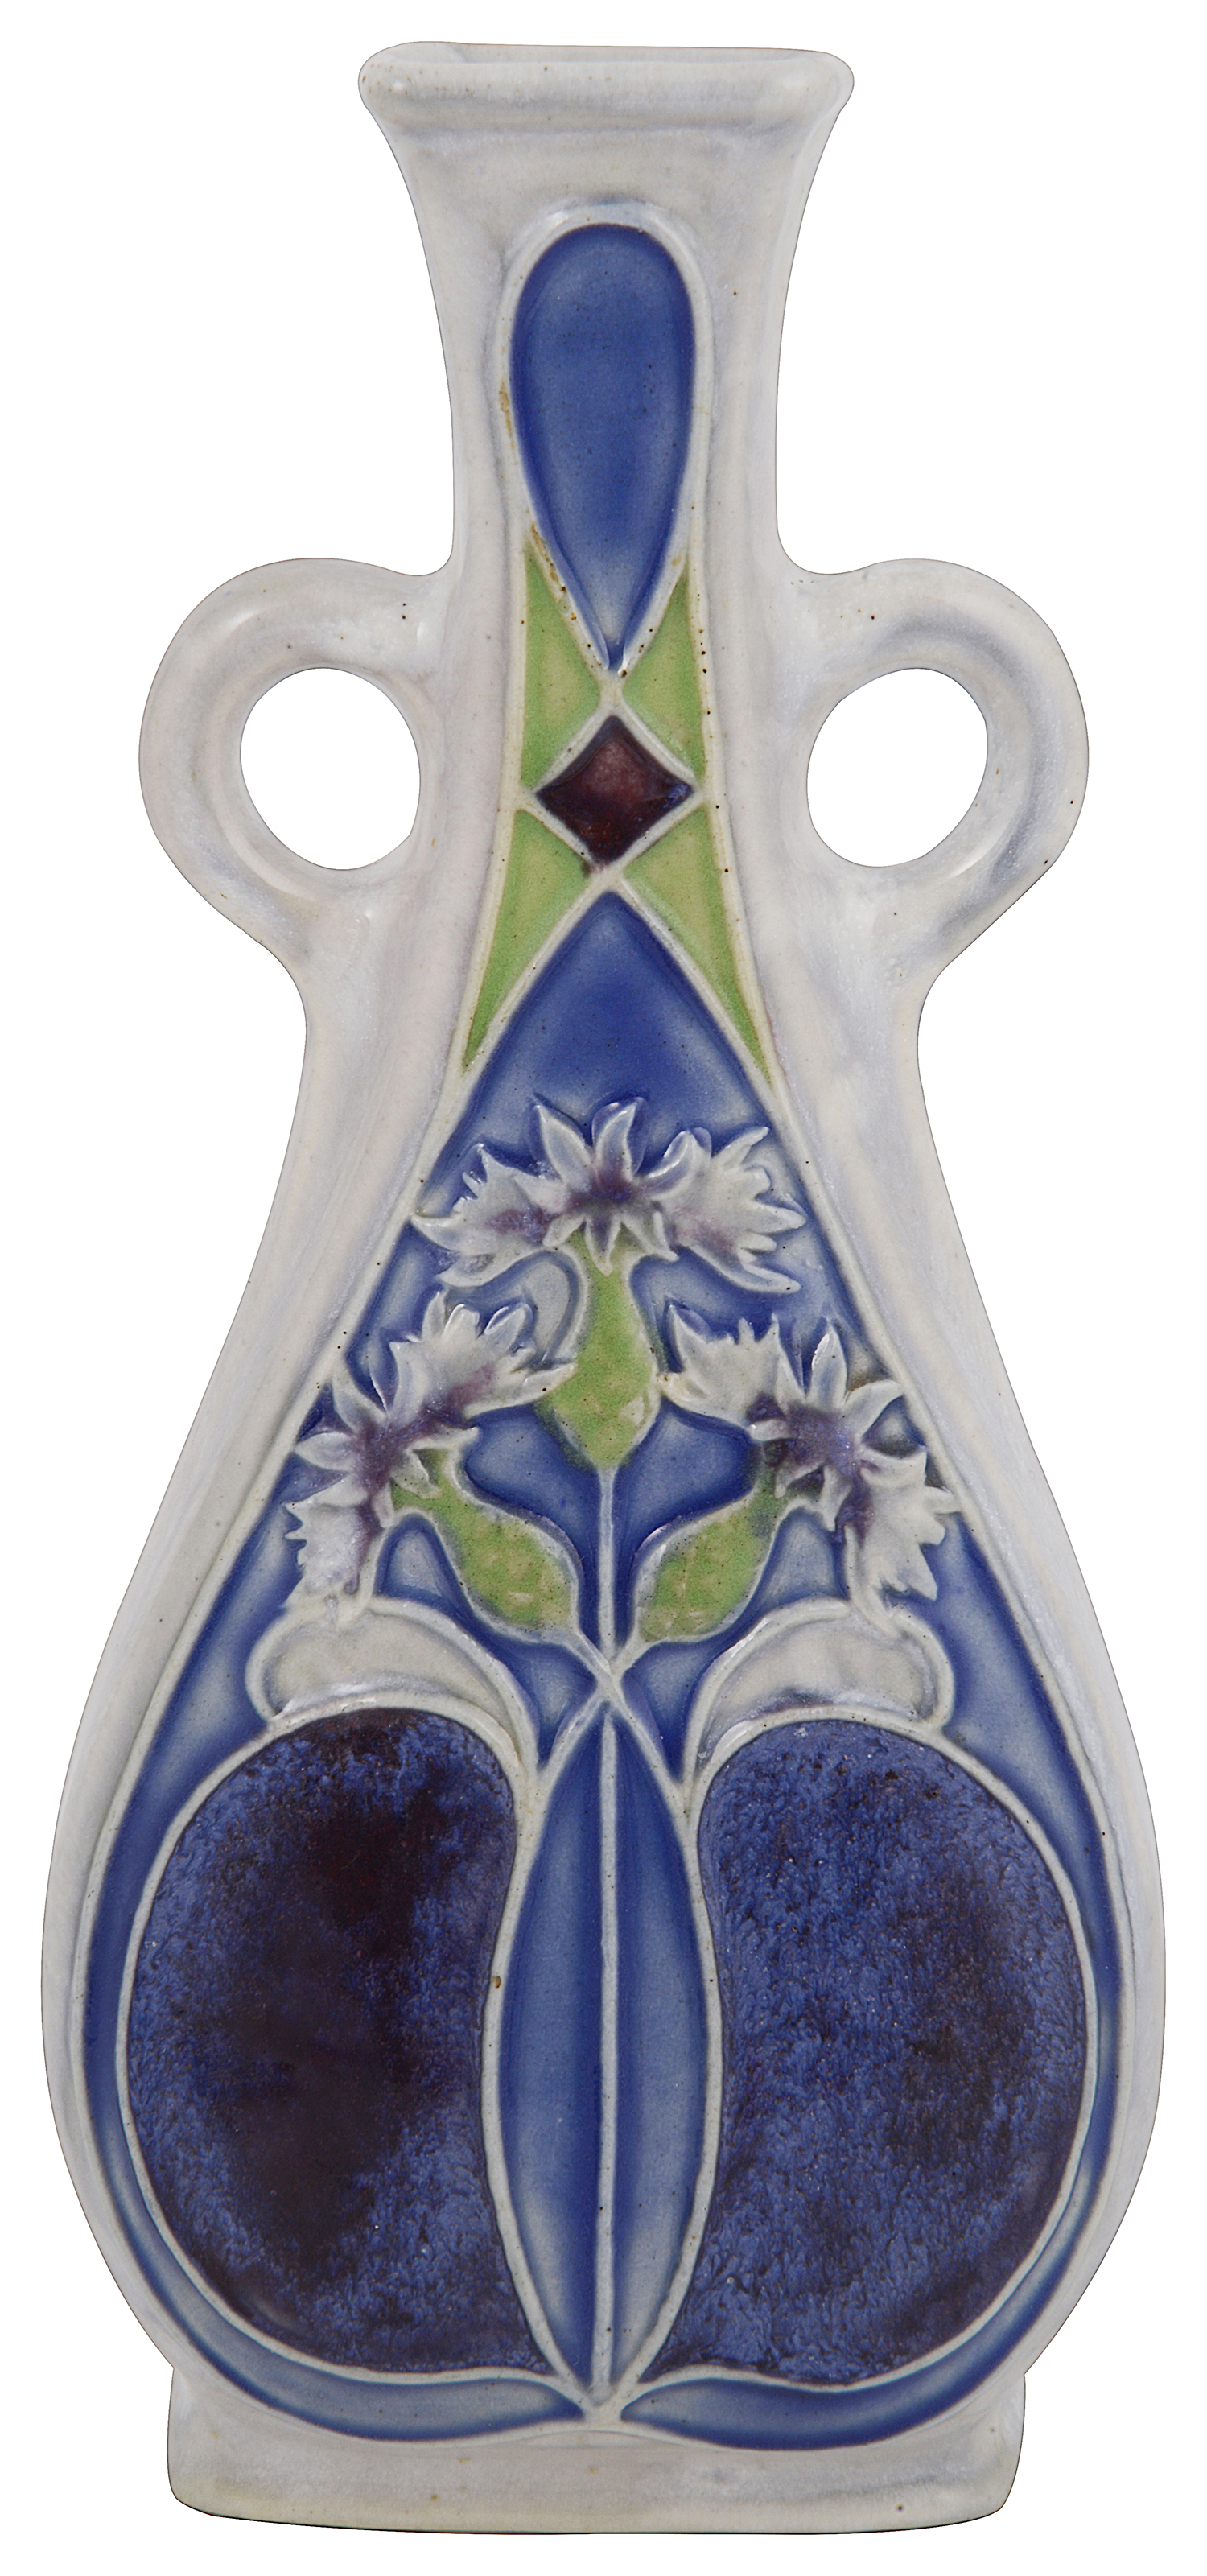 A Royal Doulton Lambeth twin handled Art Nouveau vase by Leslie Harradine